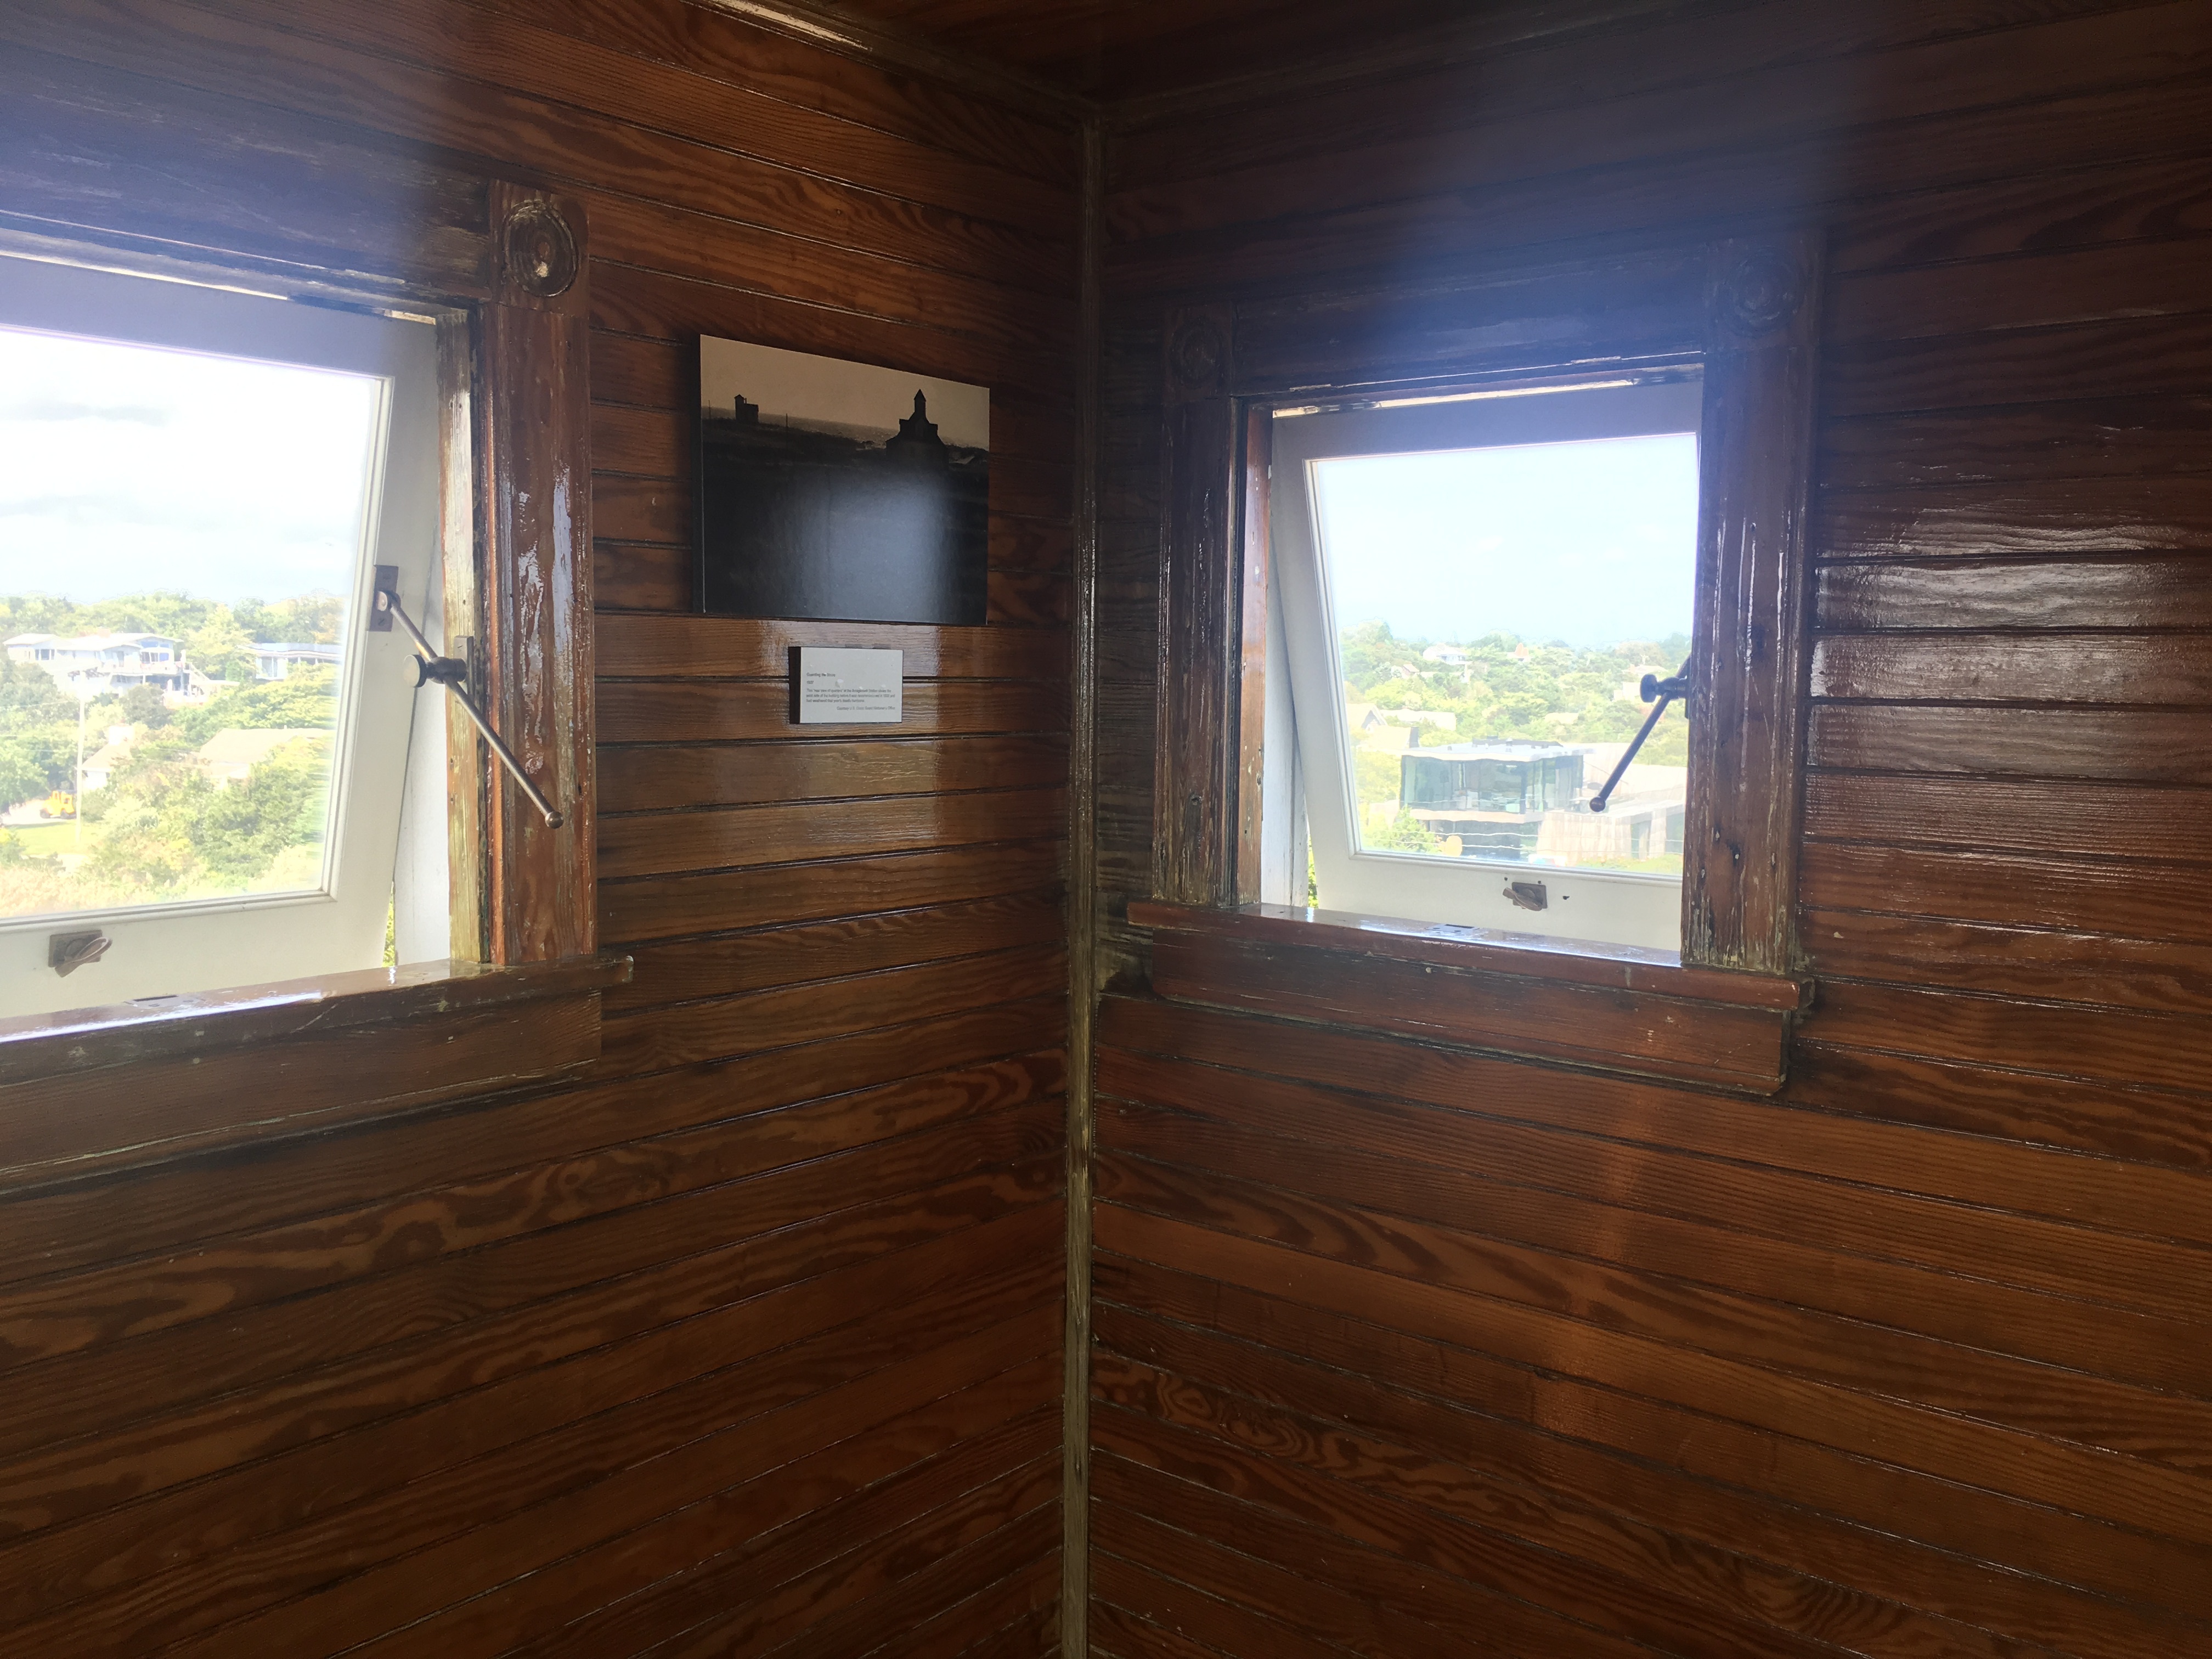 windows and wood paneling